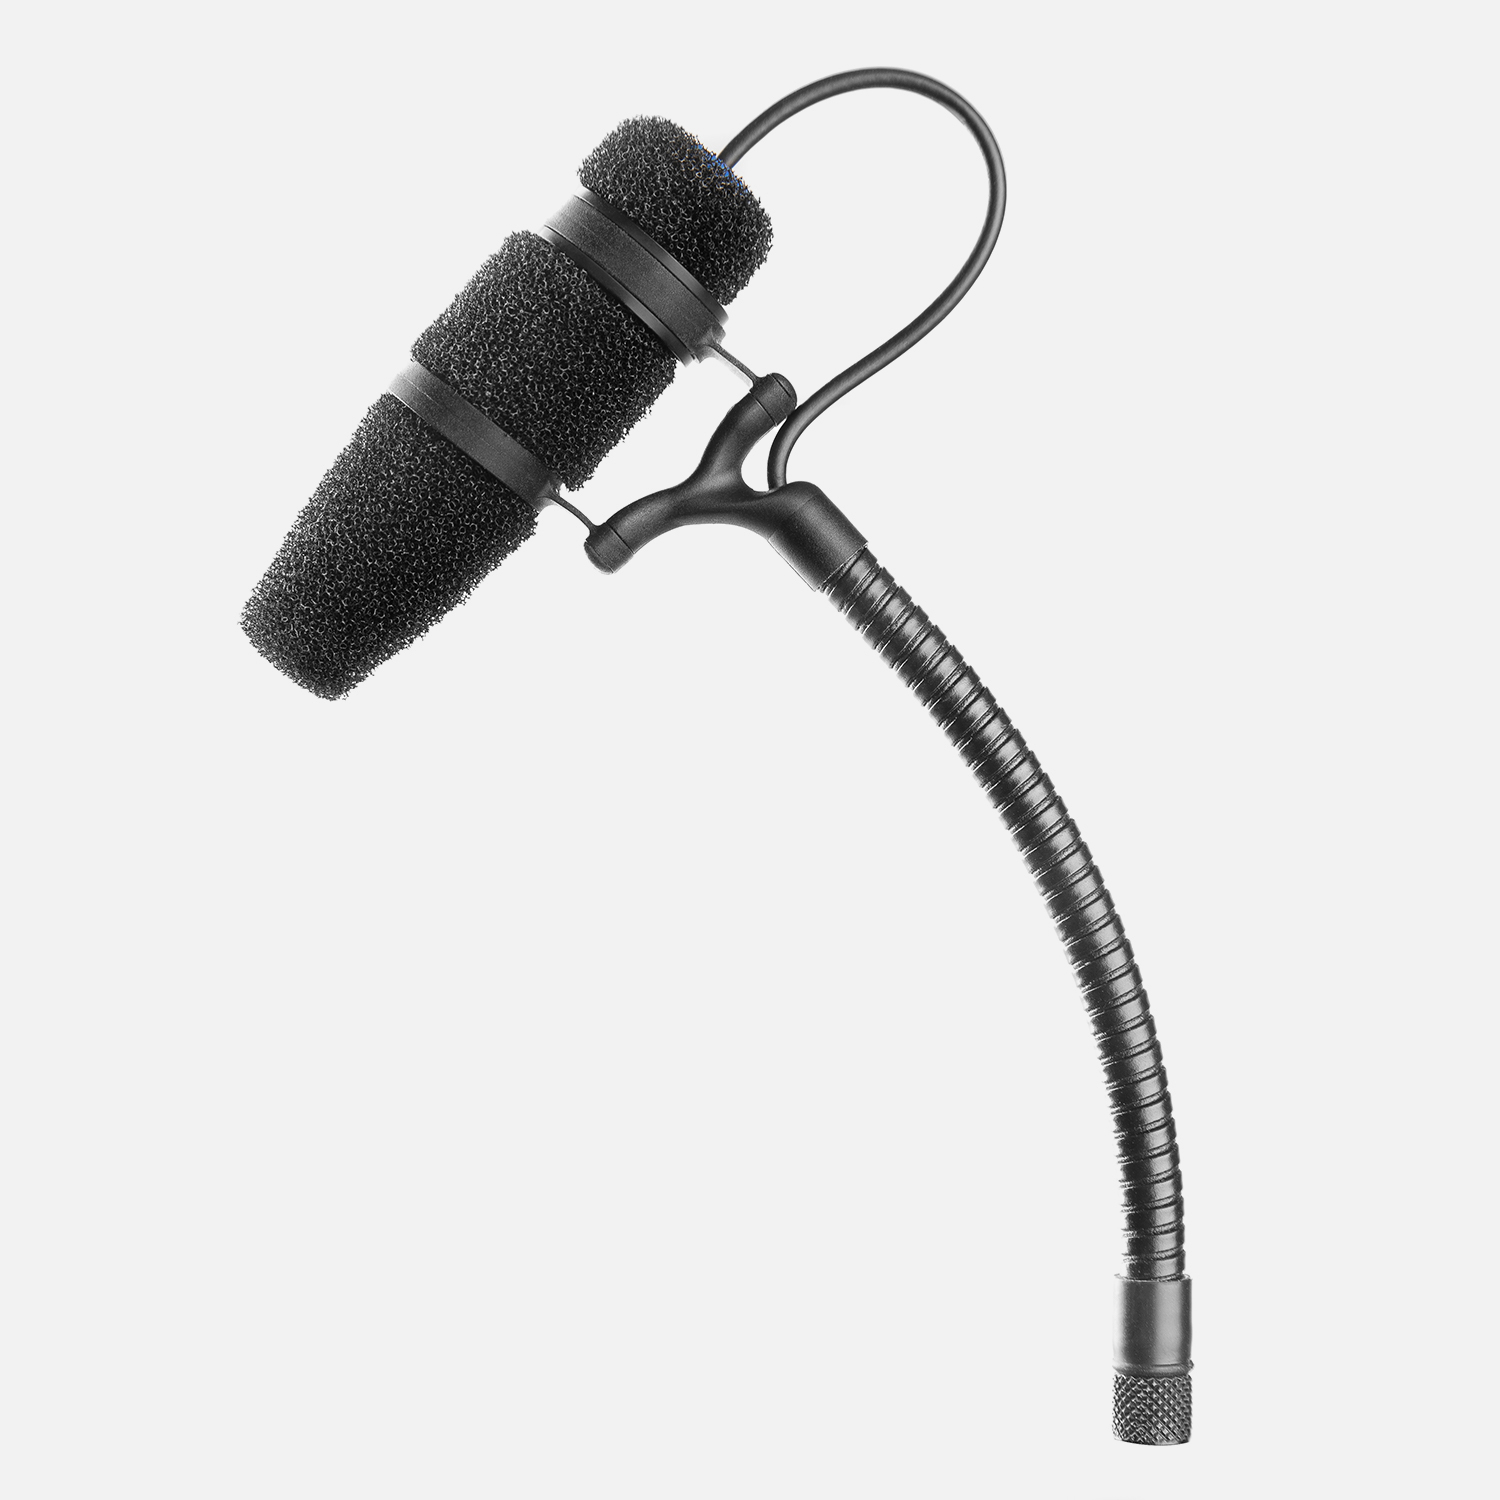 DPA CORE 4097 Miniature Super-Cardioid Microphone | AKA Pro Audio